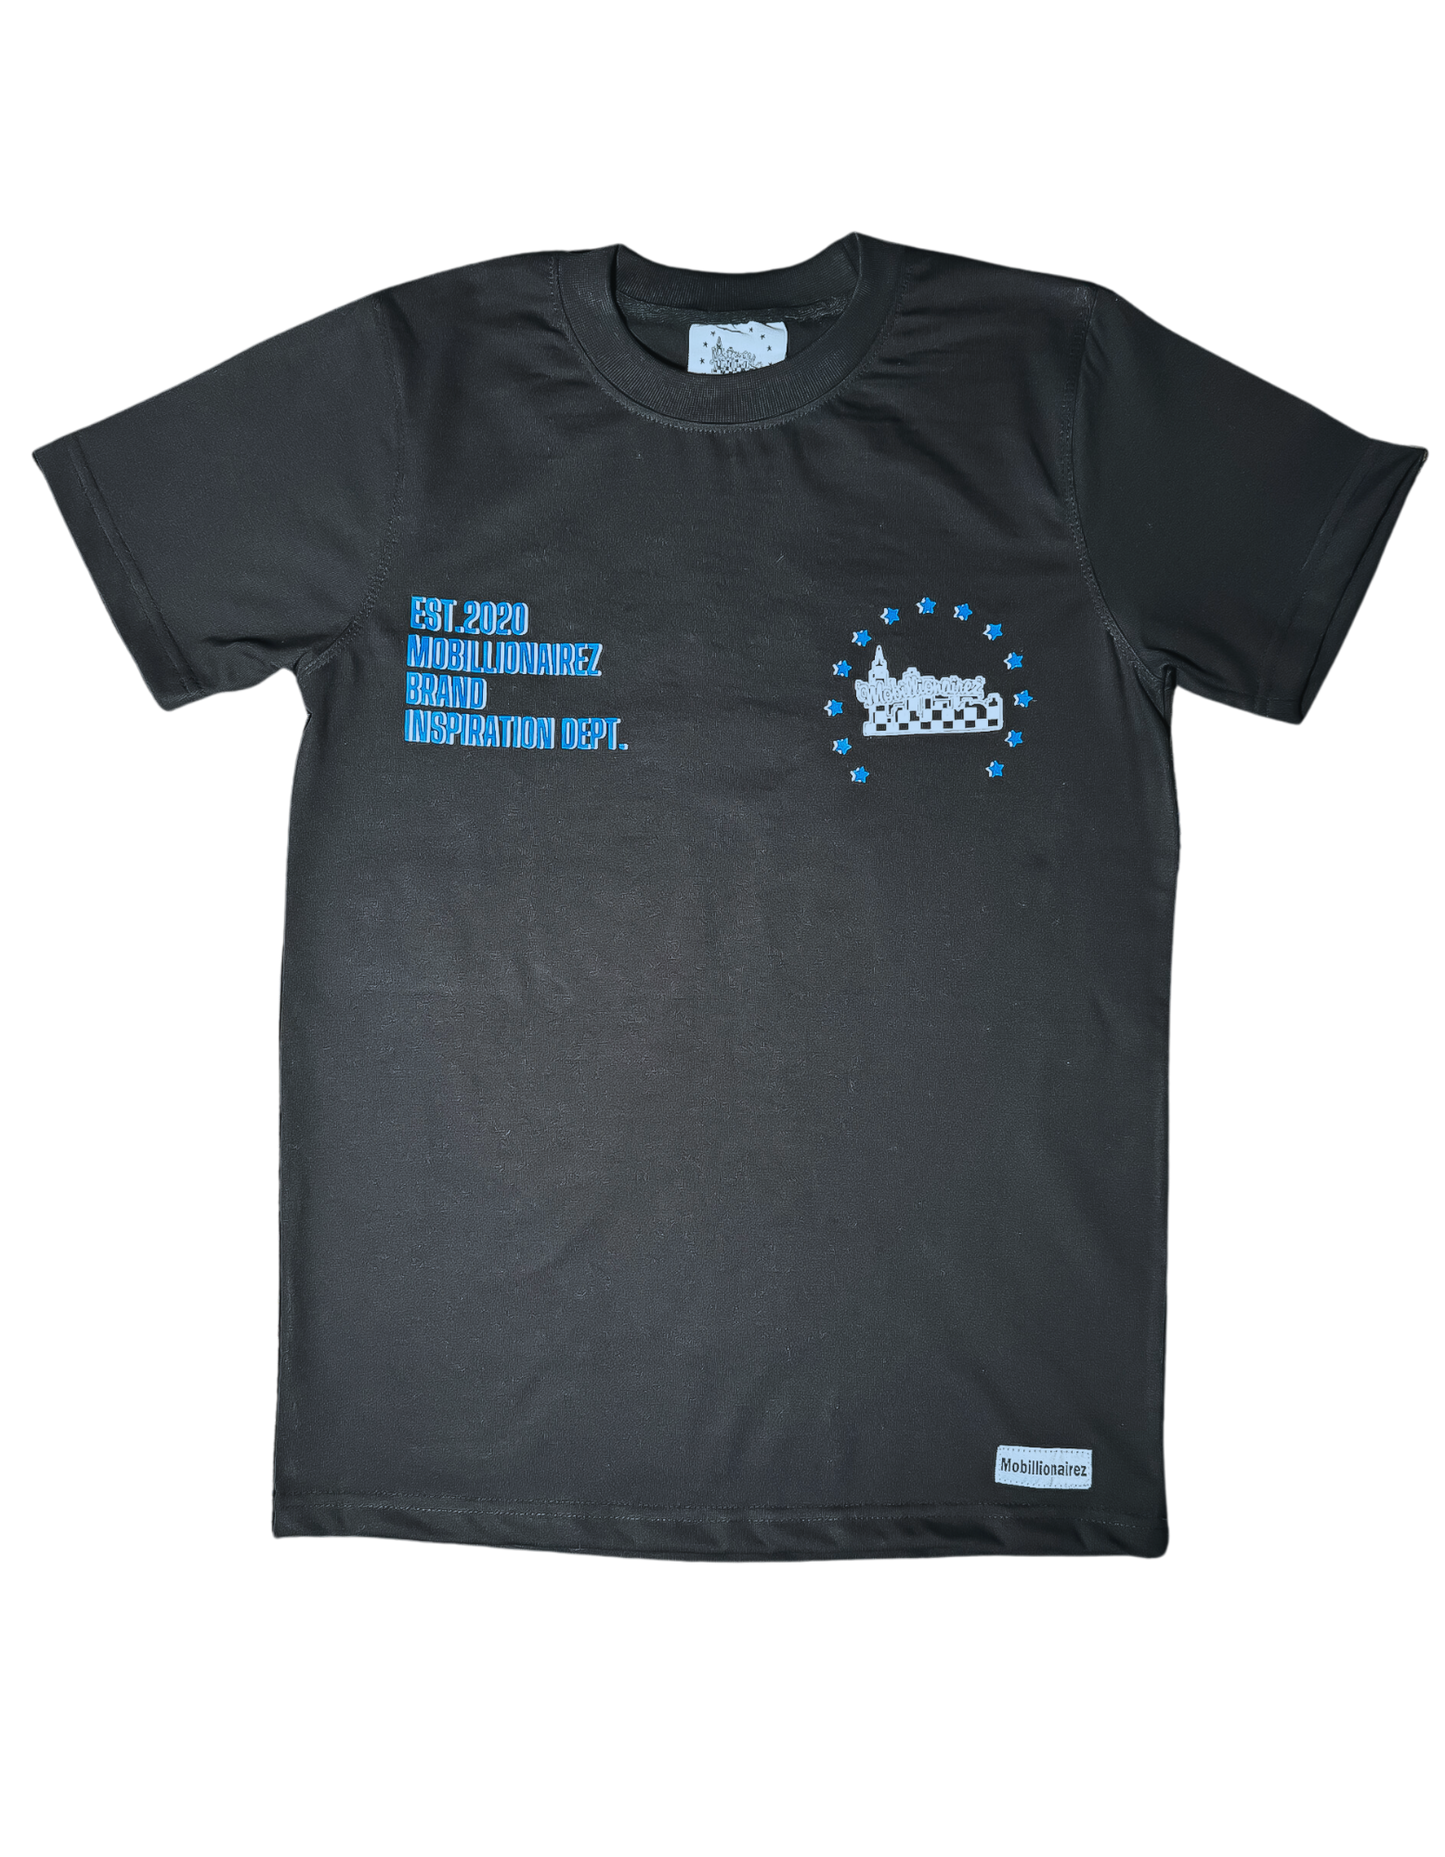 Mobillionairez "See the Good" T-shirt - Black (Unisex)